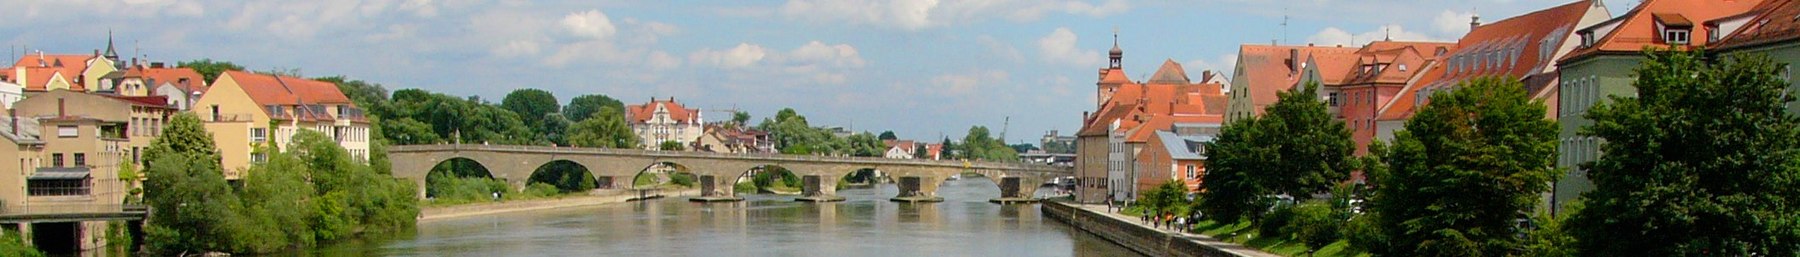 WV banner Άνω Παλατινάτο Δούναβης στο Regensburg.jpg